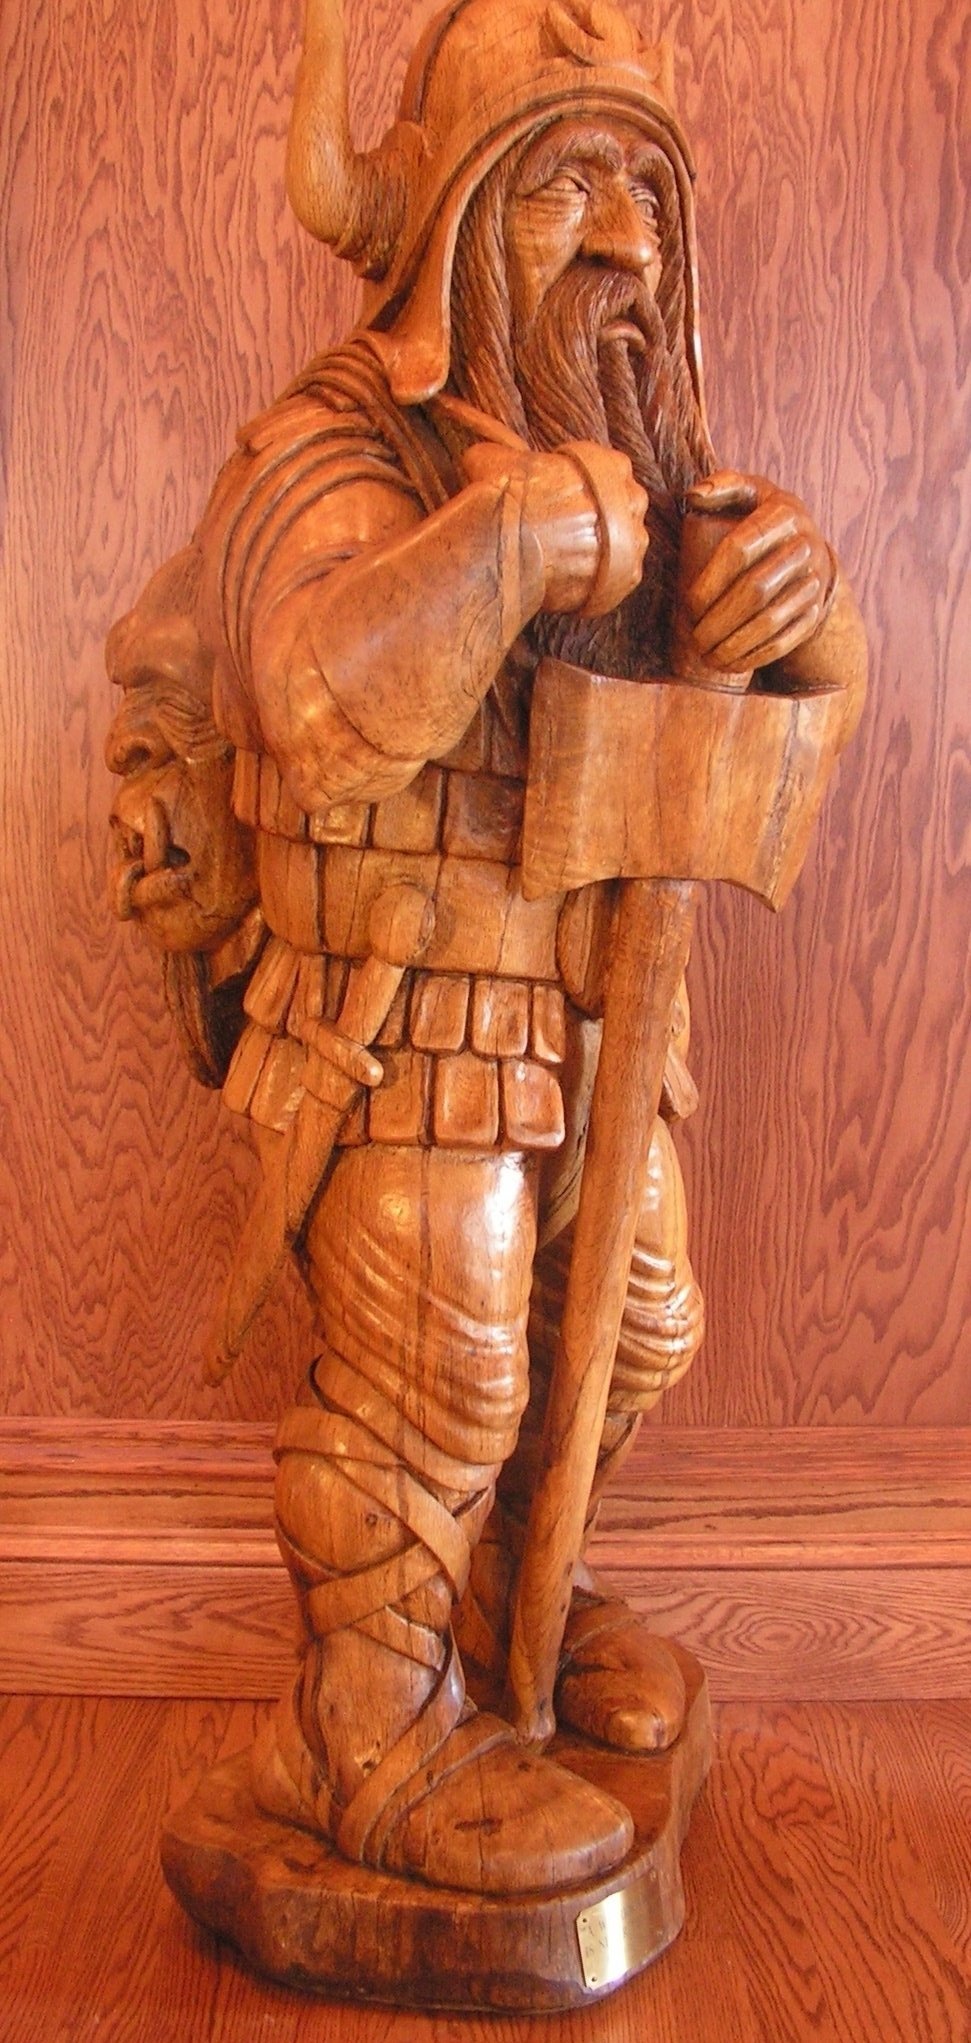 Ronald Smith; A Warrior Dwarf Is Never ..., 1997, Original sculpture wood, 24 x 60 inches. Artwork description: 241  A Warrior Dwarf is Never Too Old , Sculpture, wood, fantasy, Tolkien, mythology, figurative, representational...